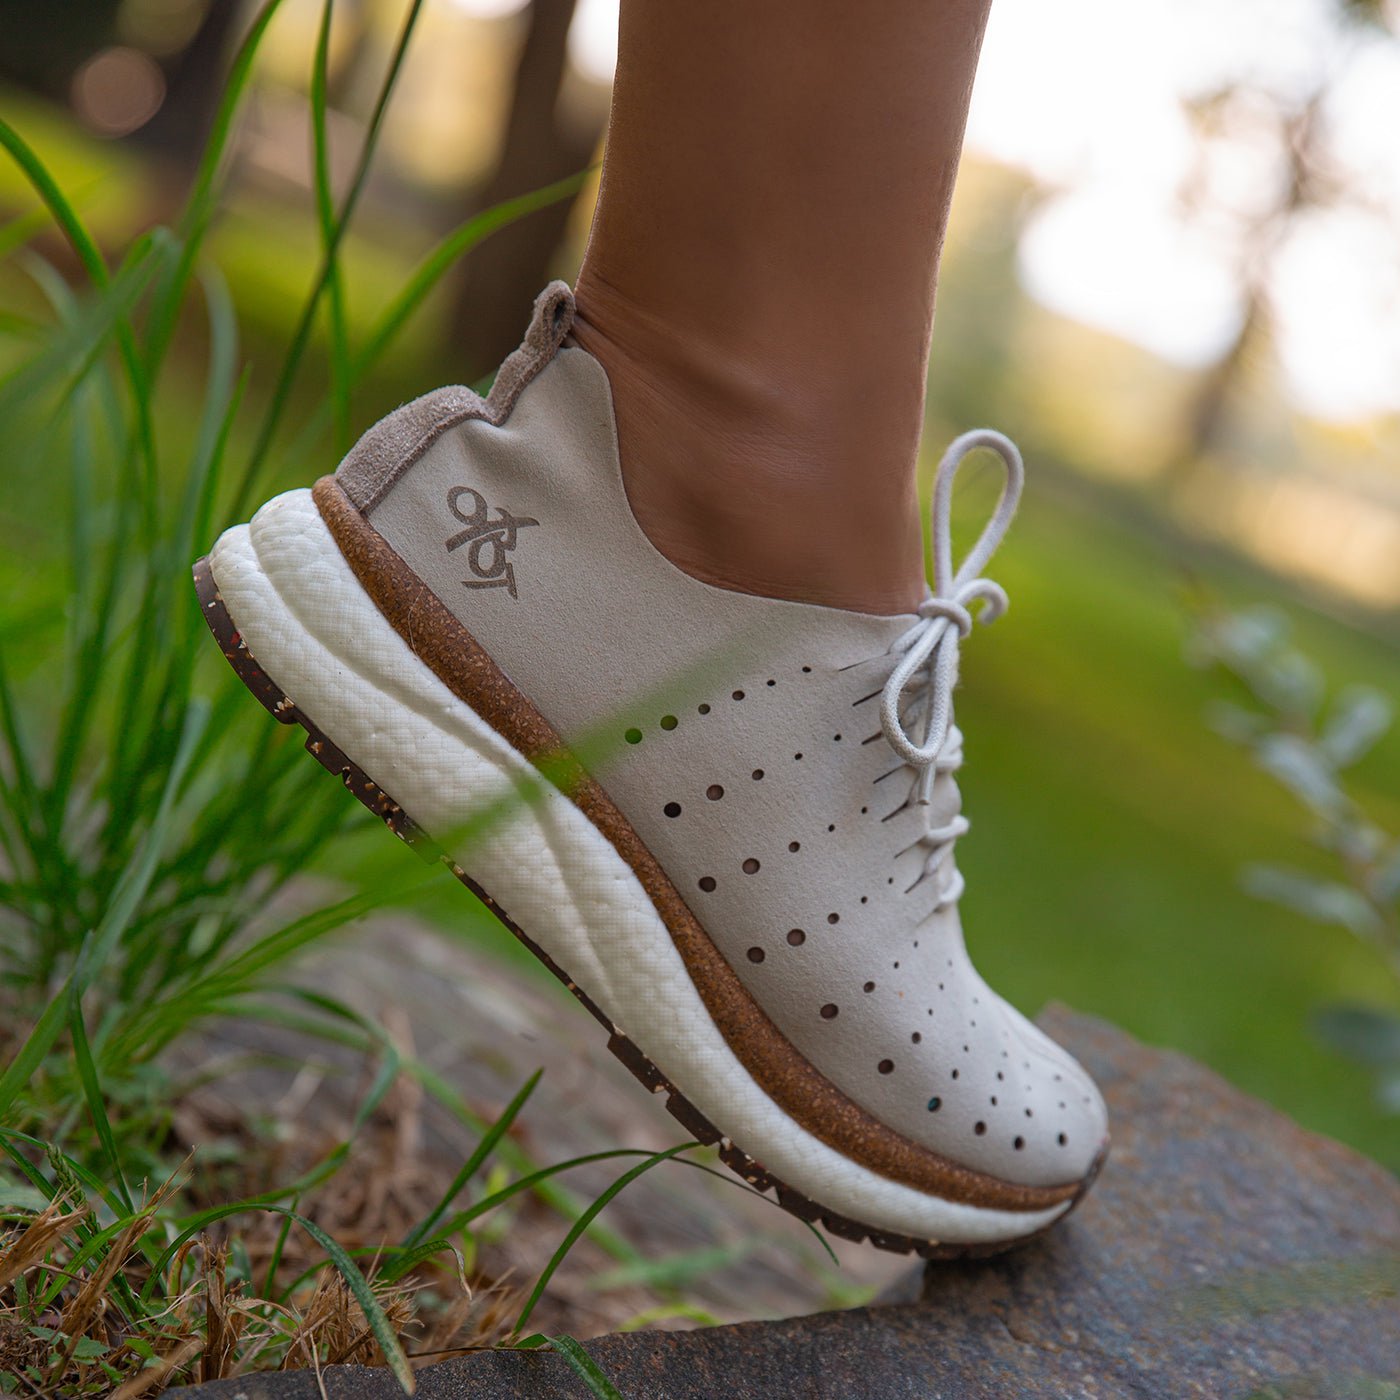 Women's Casual Shoes, Comfortable Walking & Travel Shoes